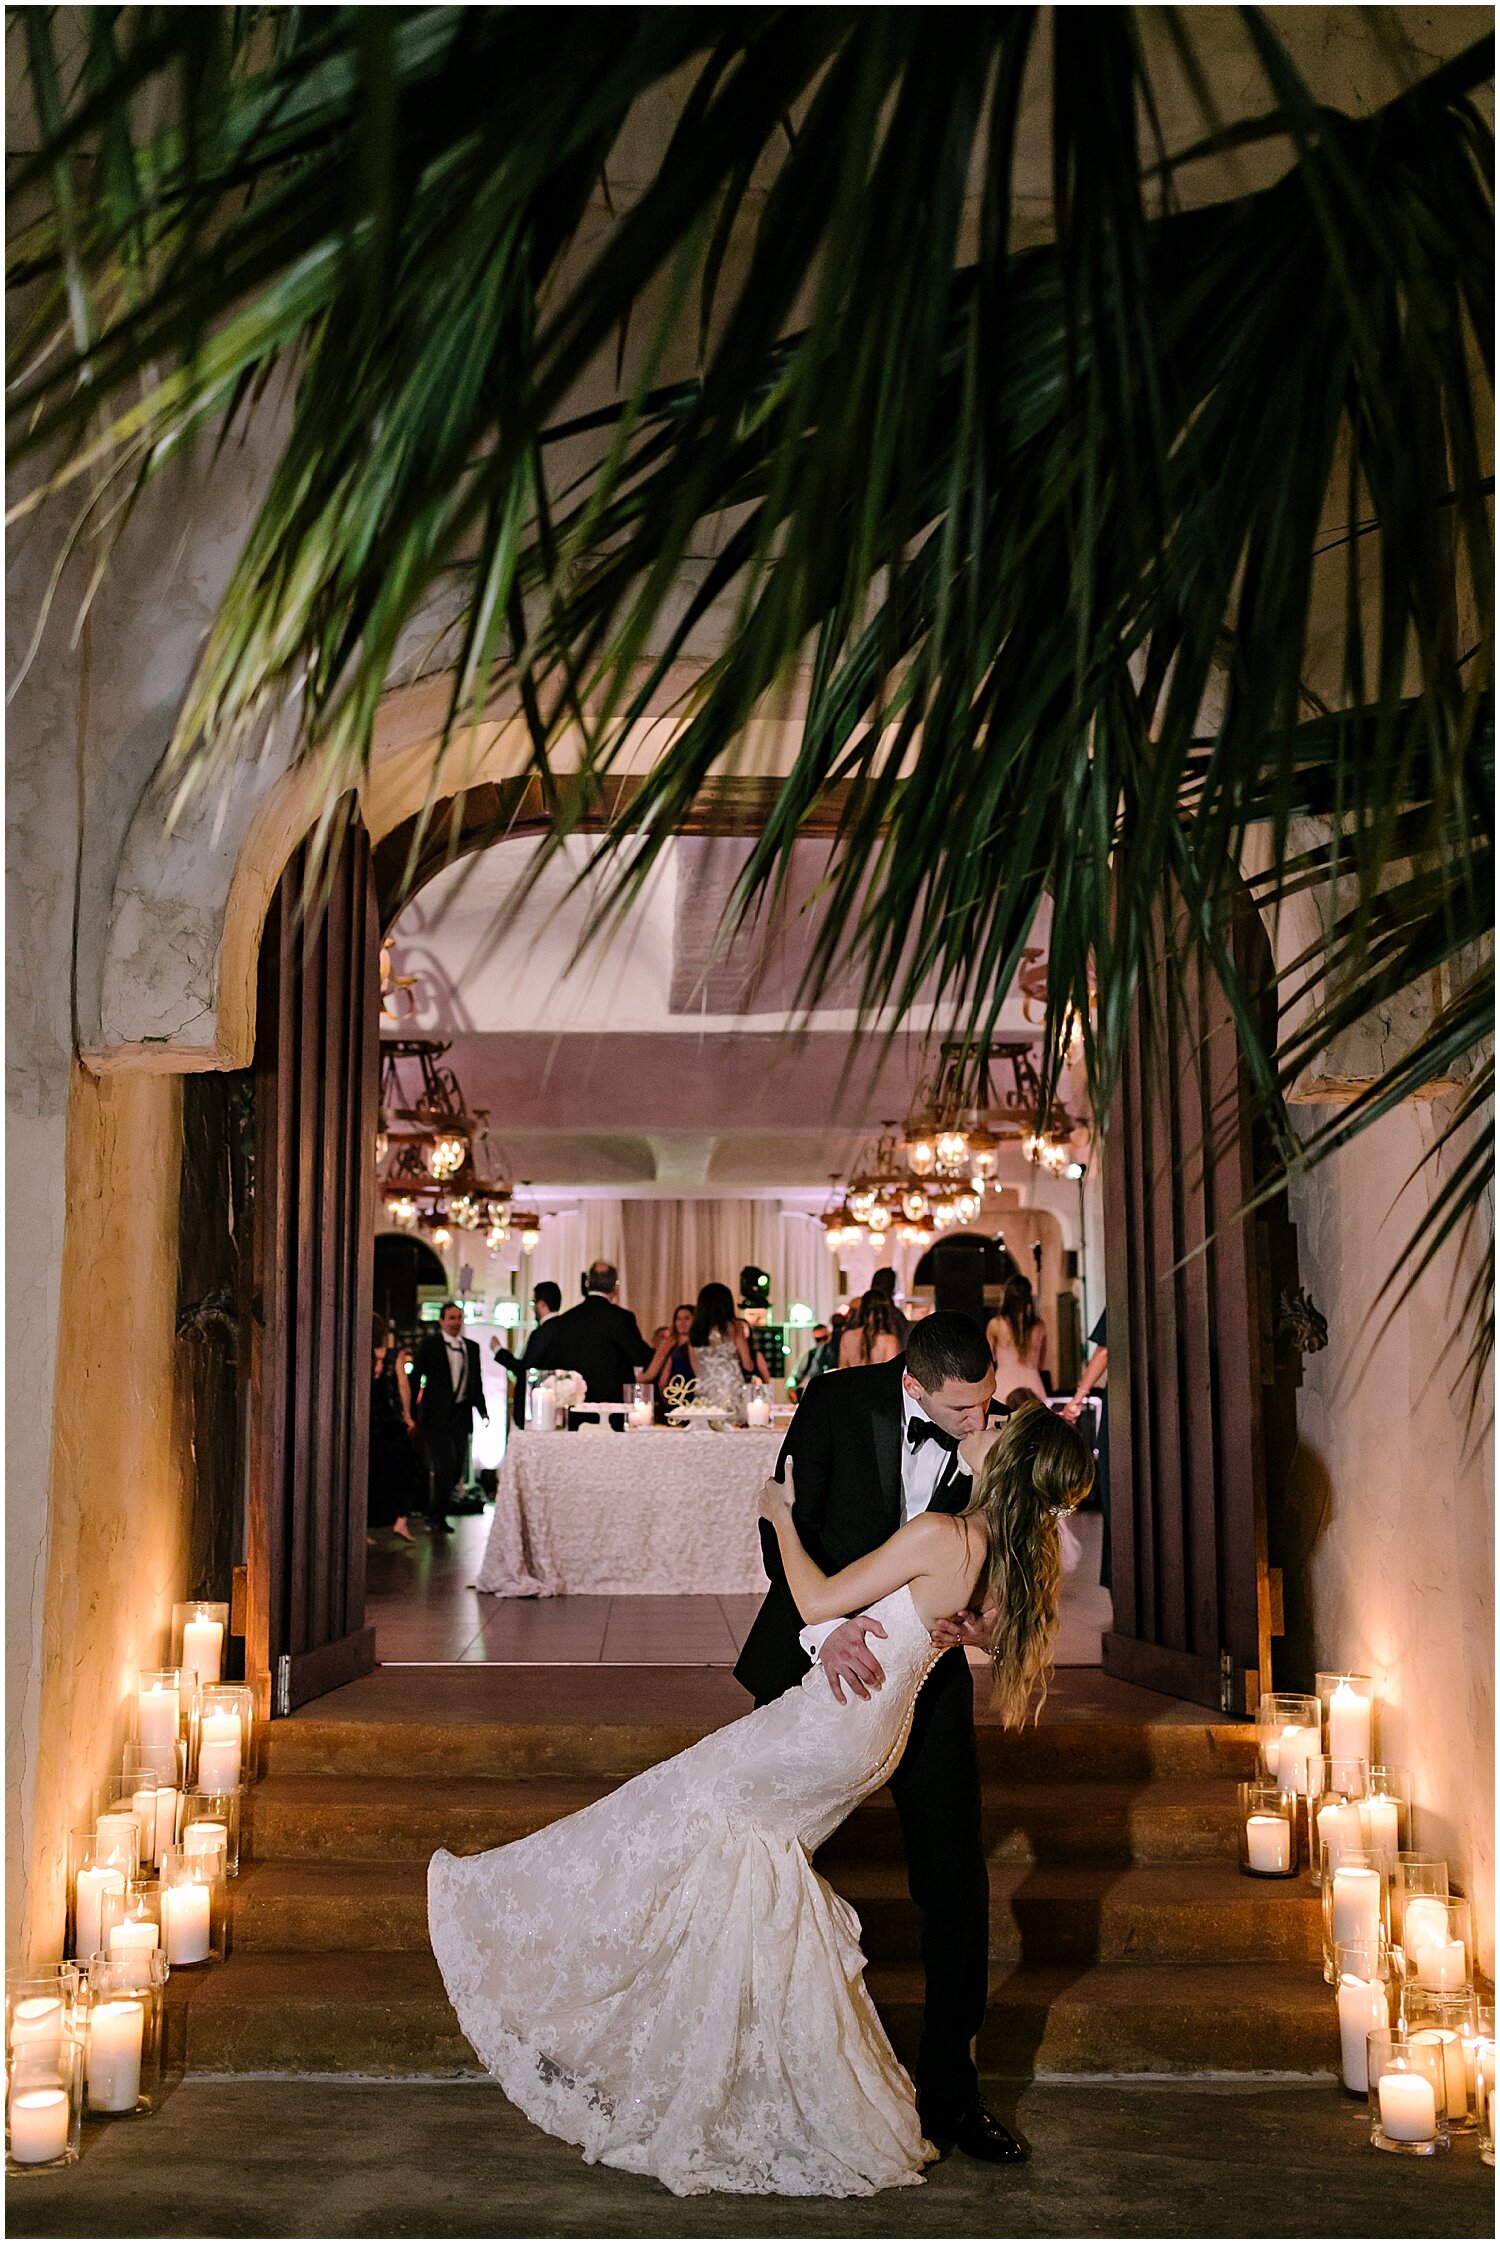  romantic elegant wedding reception decor 